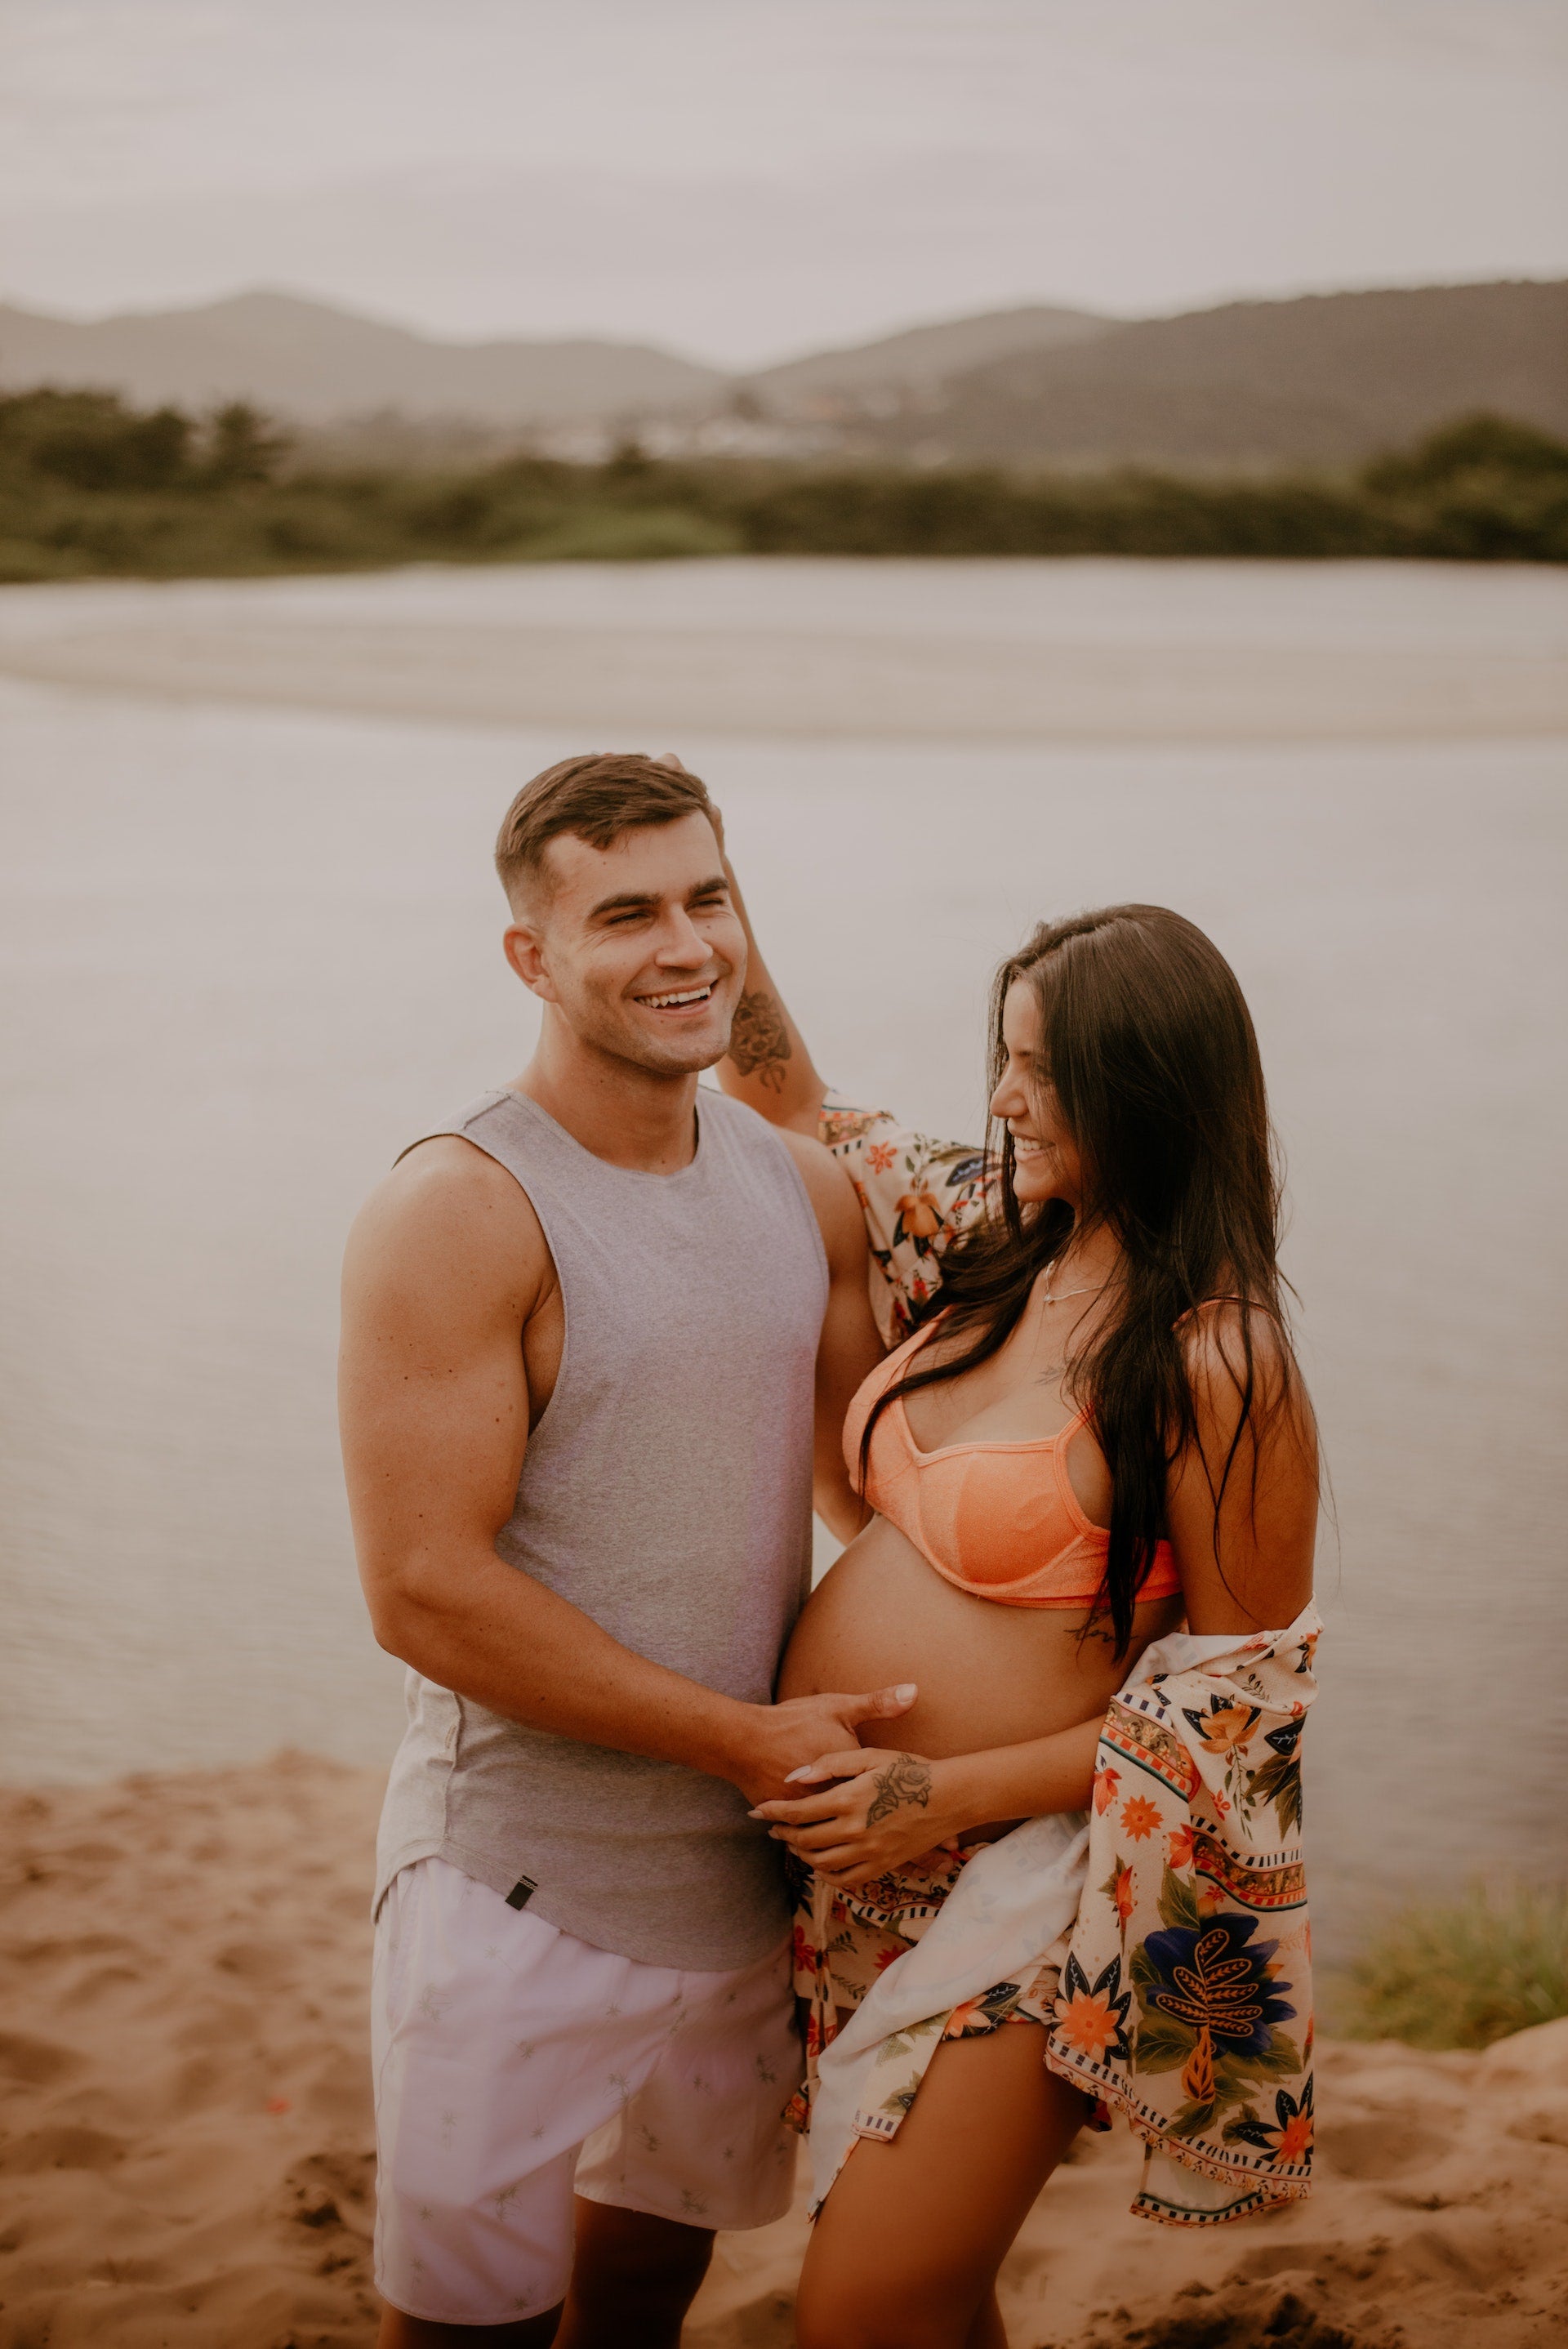 Pregnant couple smiling